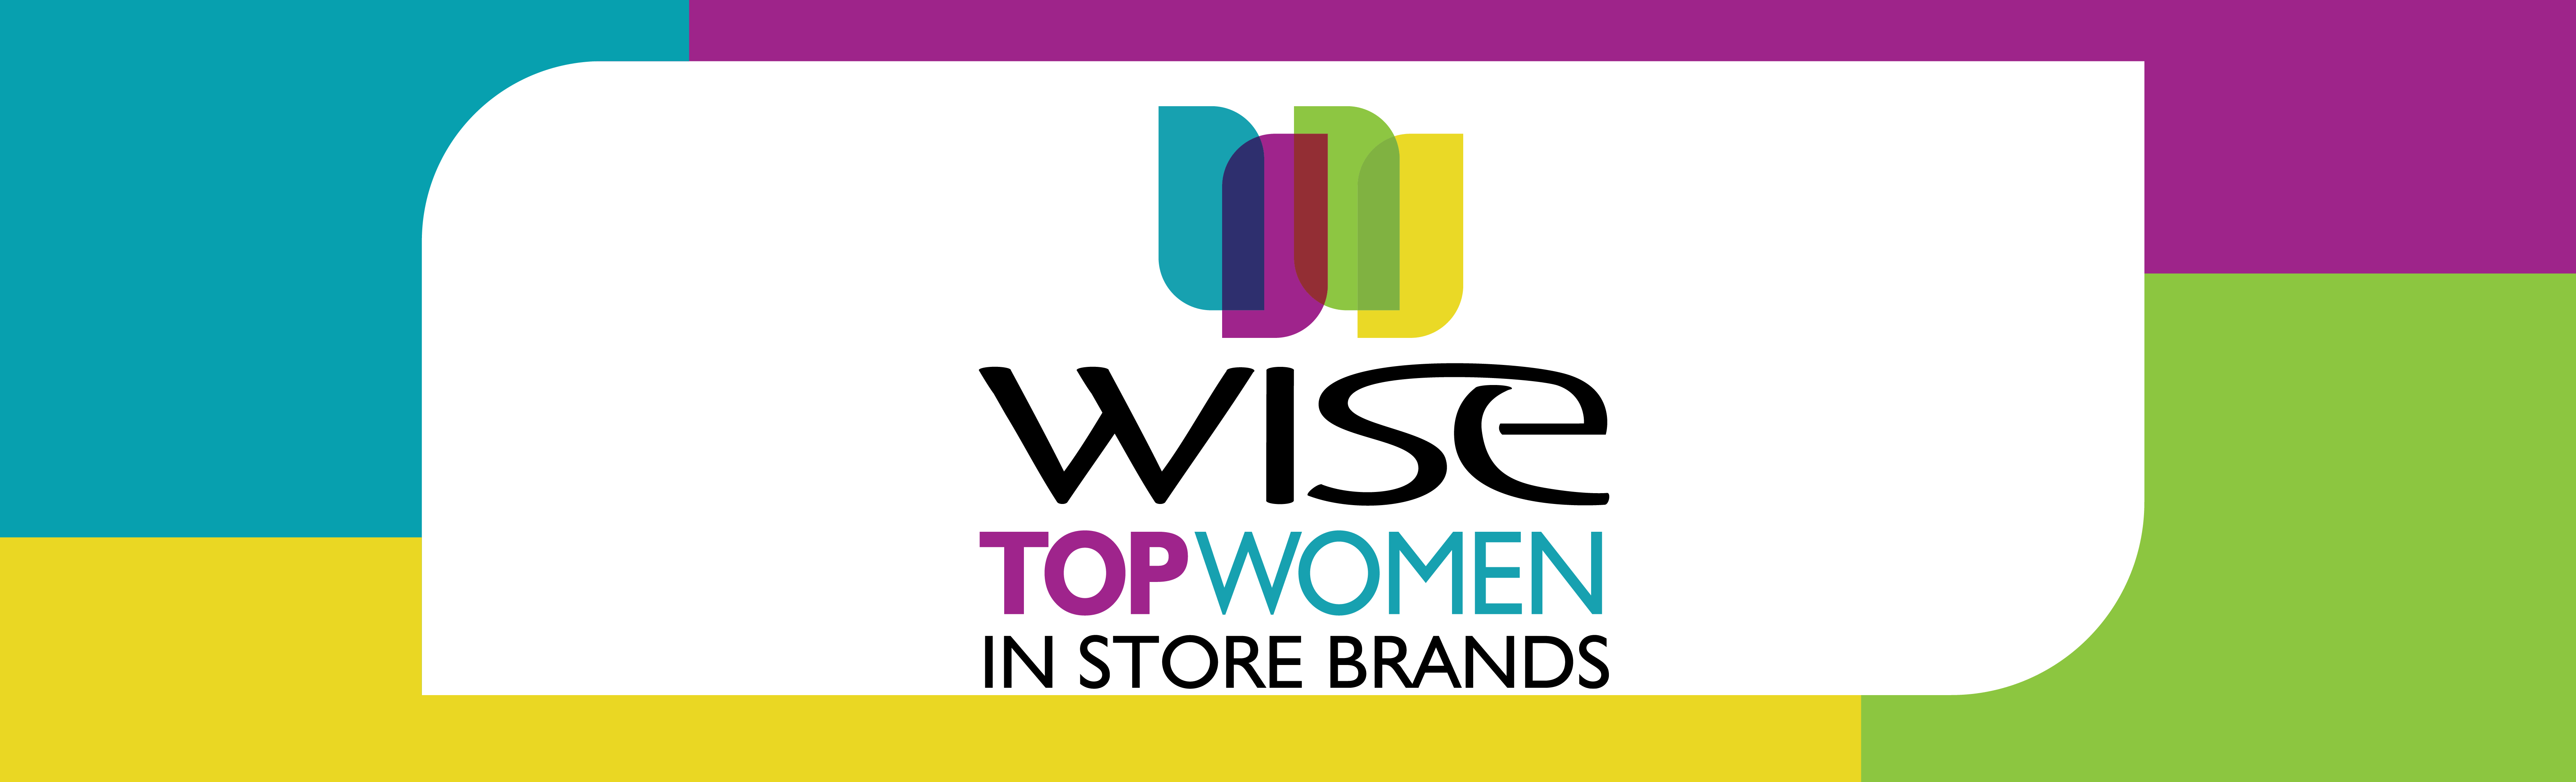 2021 WISE Web Headers TOP WOMEN